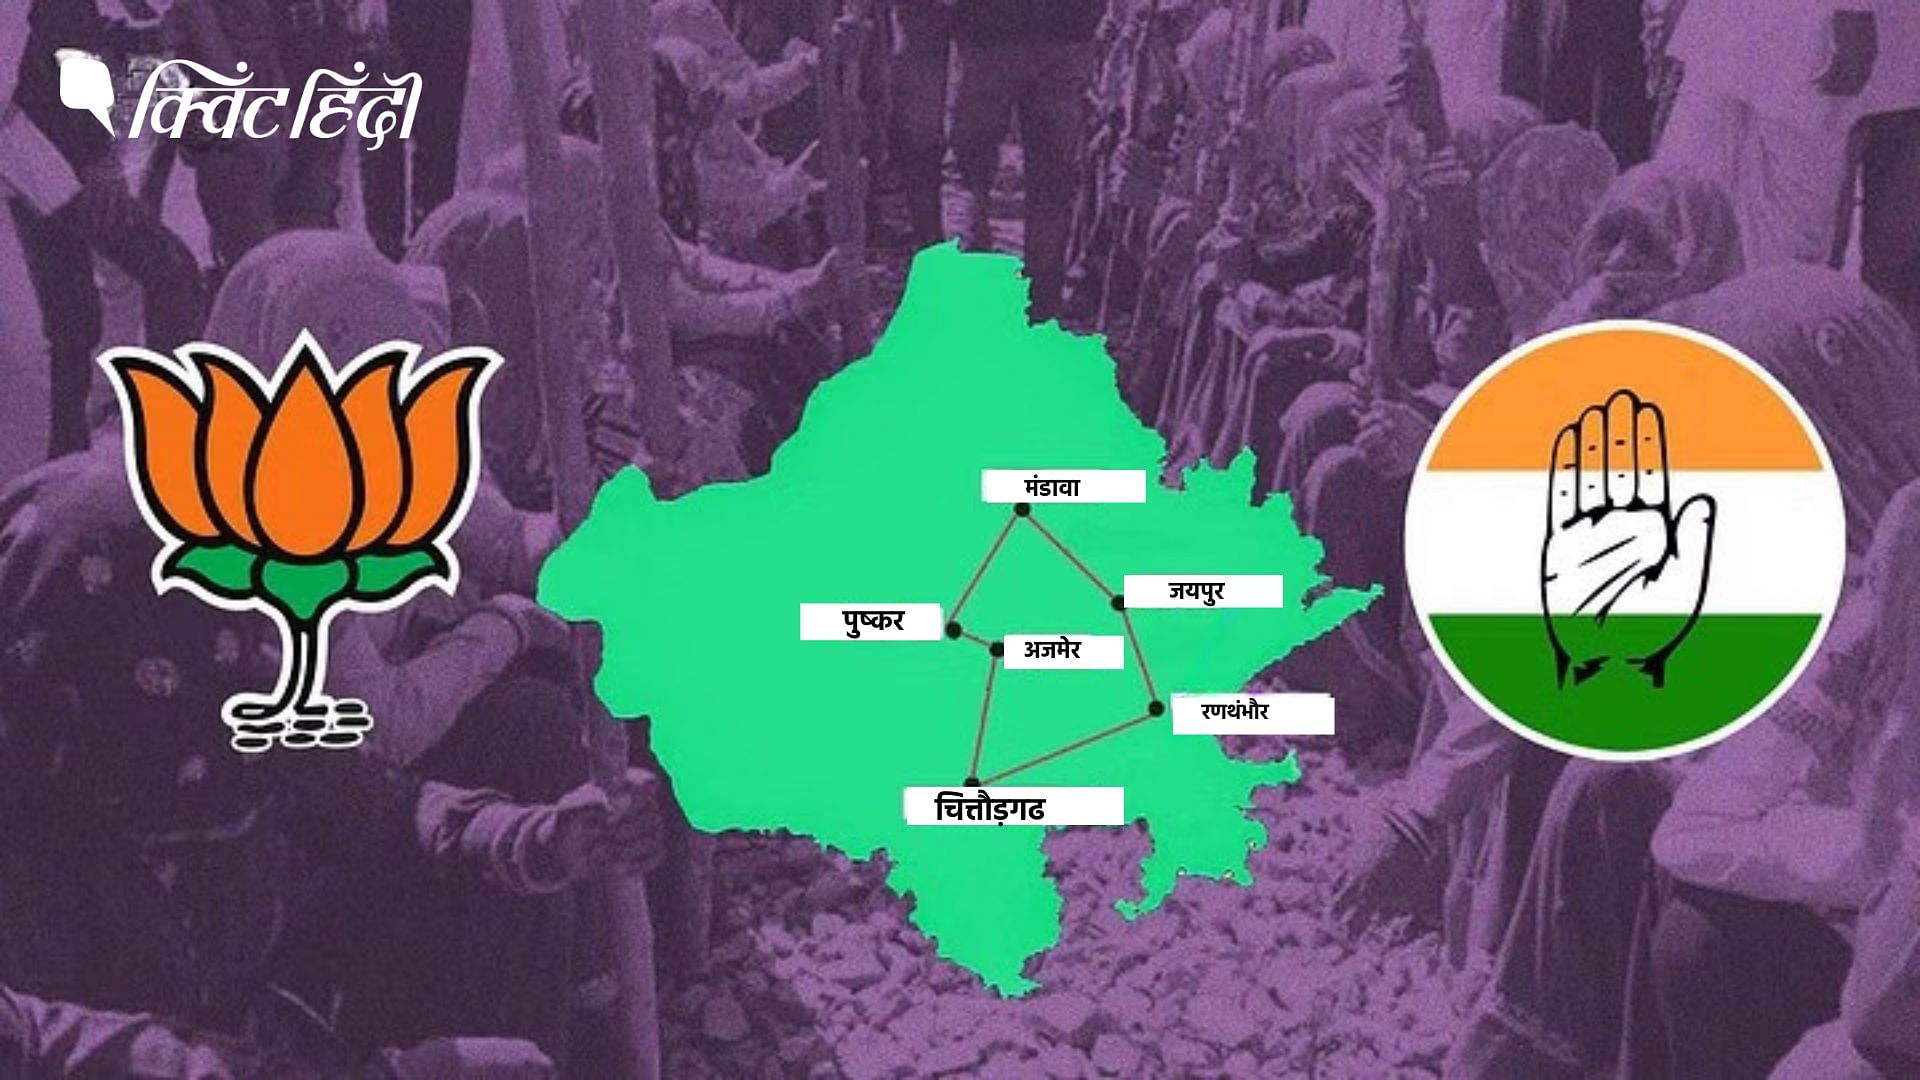 <div class="paragraphs"><p>Rajasthan Elections: गुर्जर वोट-ERCP मुद्दा, कौन जीतेगा पूर्वी राजस्थान की जंग?</p></div>